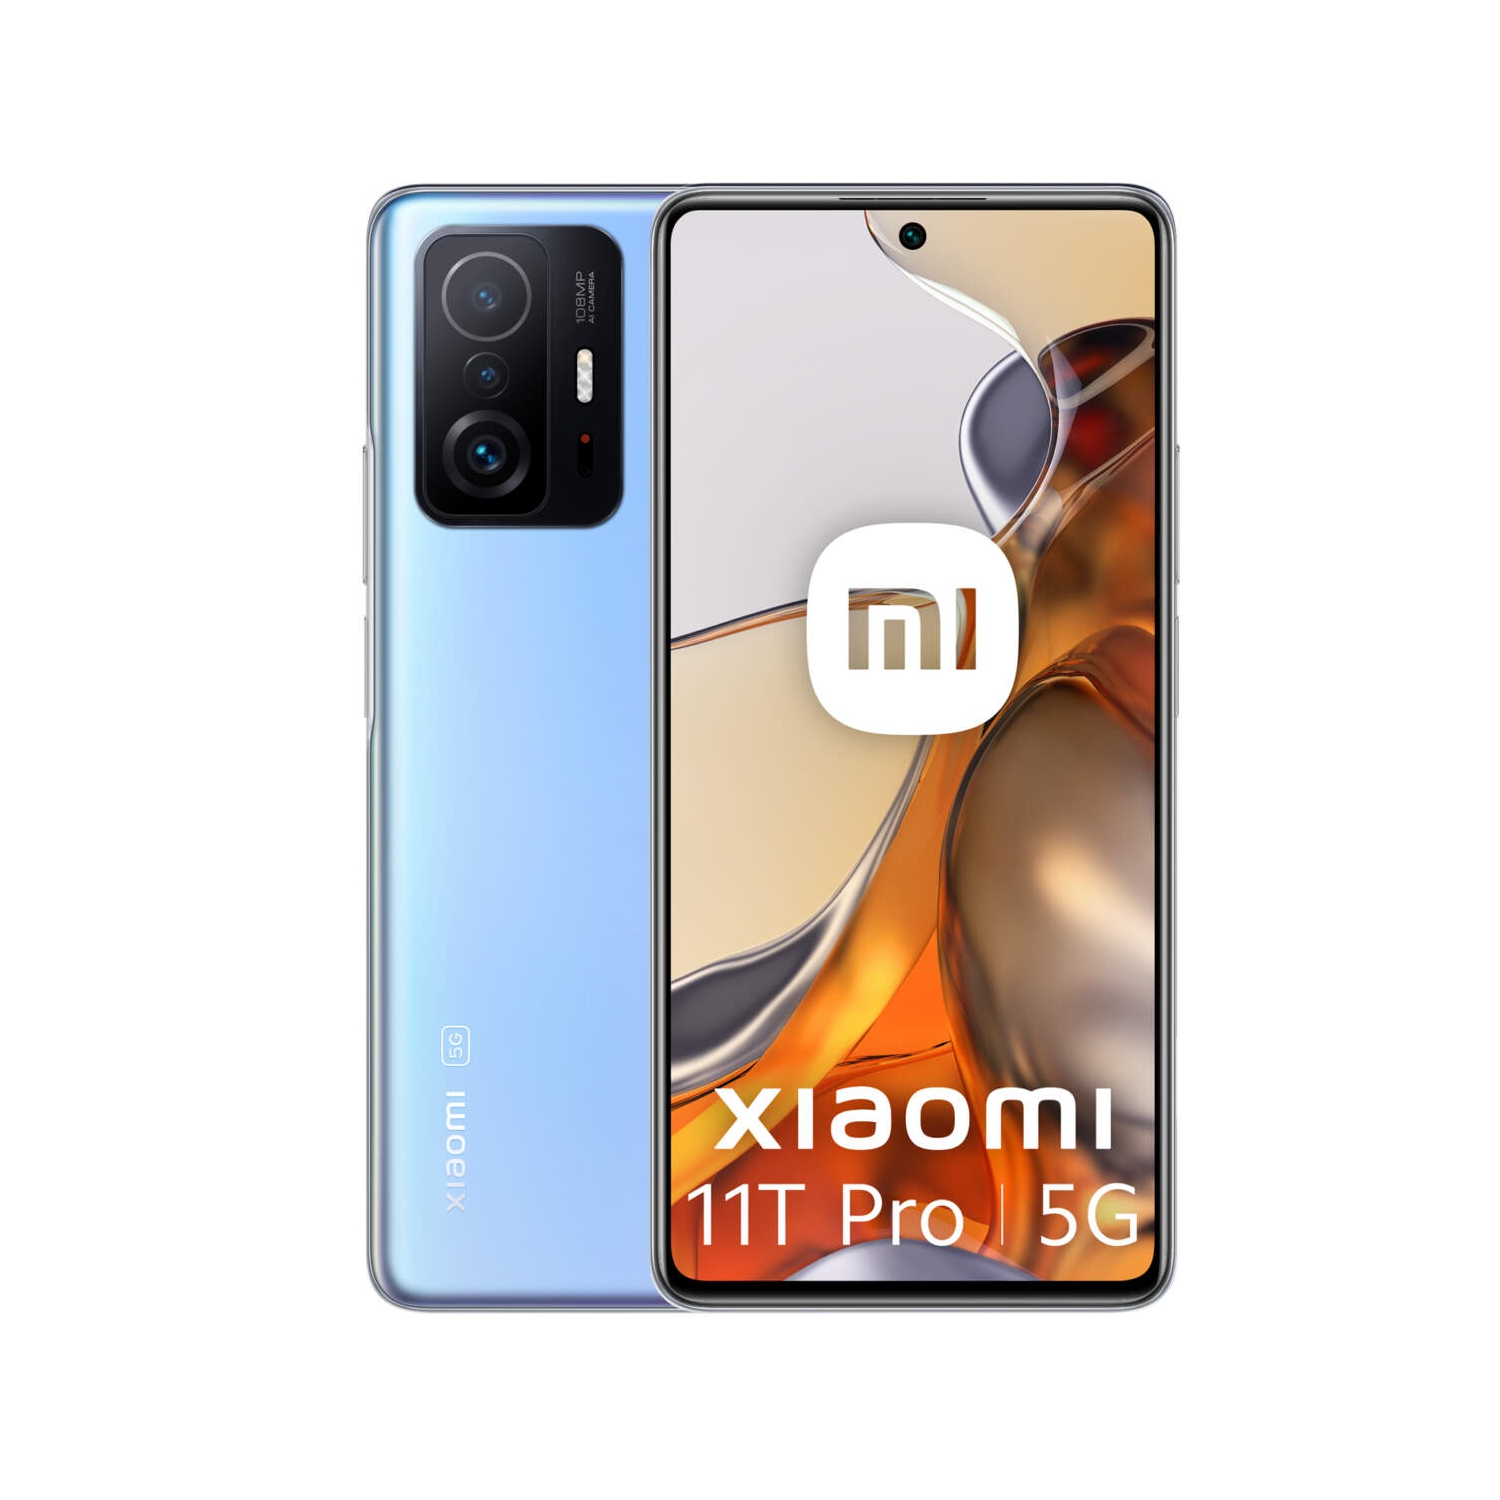 XIAOMI MI 11T PRO 8+256GB DS 5G BLUE (Op.sim free) (EUROPEAN MODEL/VERSION) - Brand New